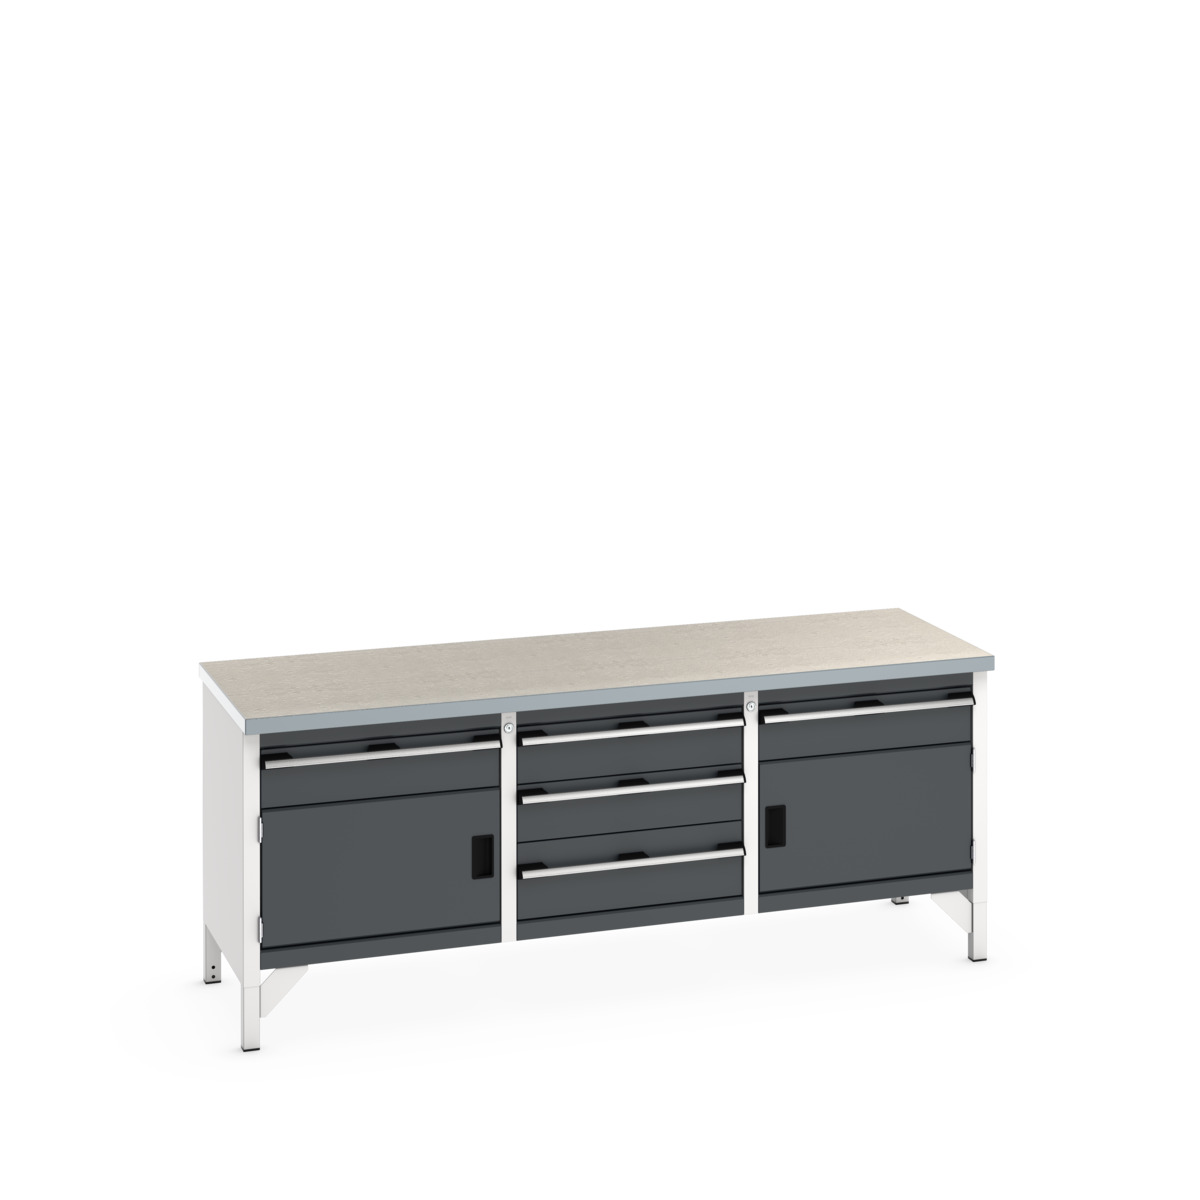 41002066. - cubio storage bench (lino)